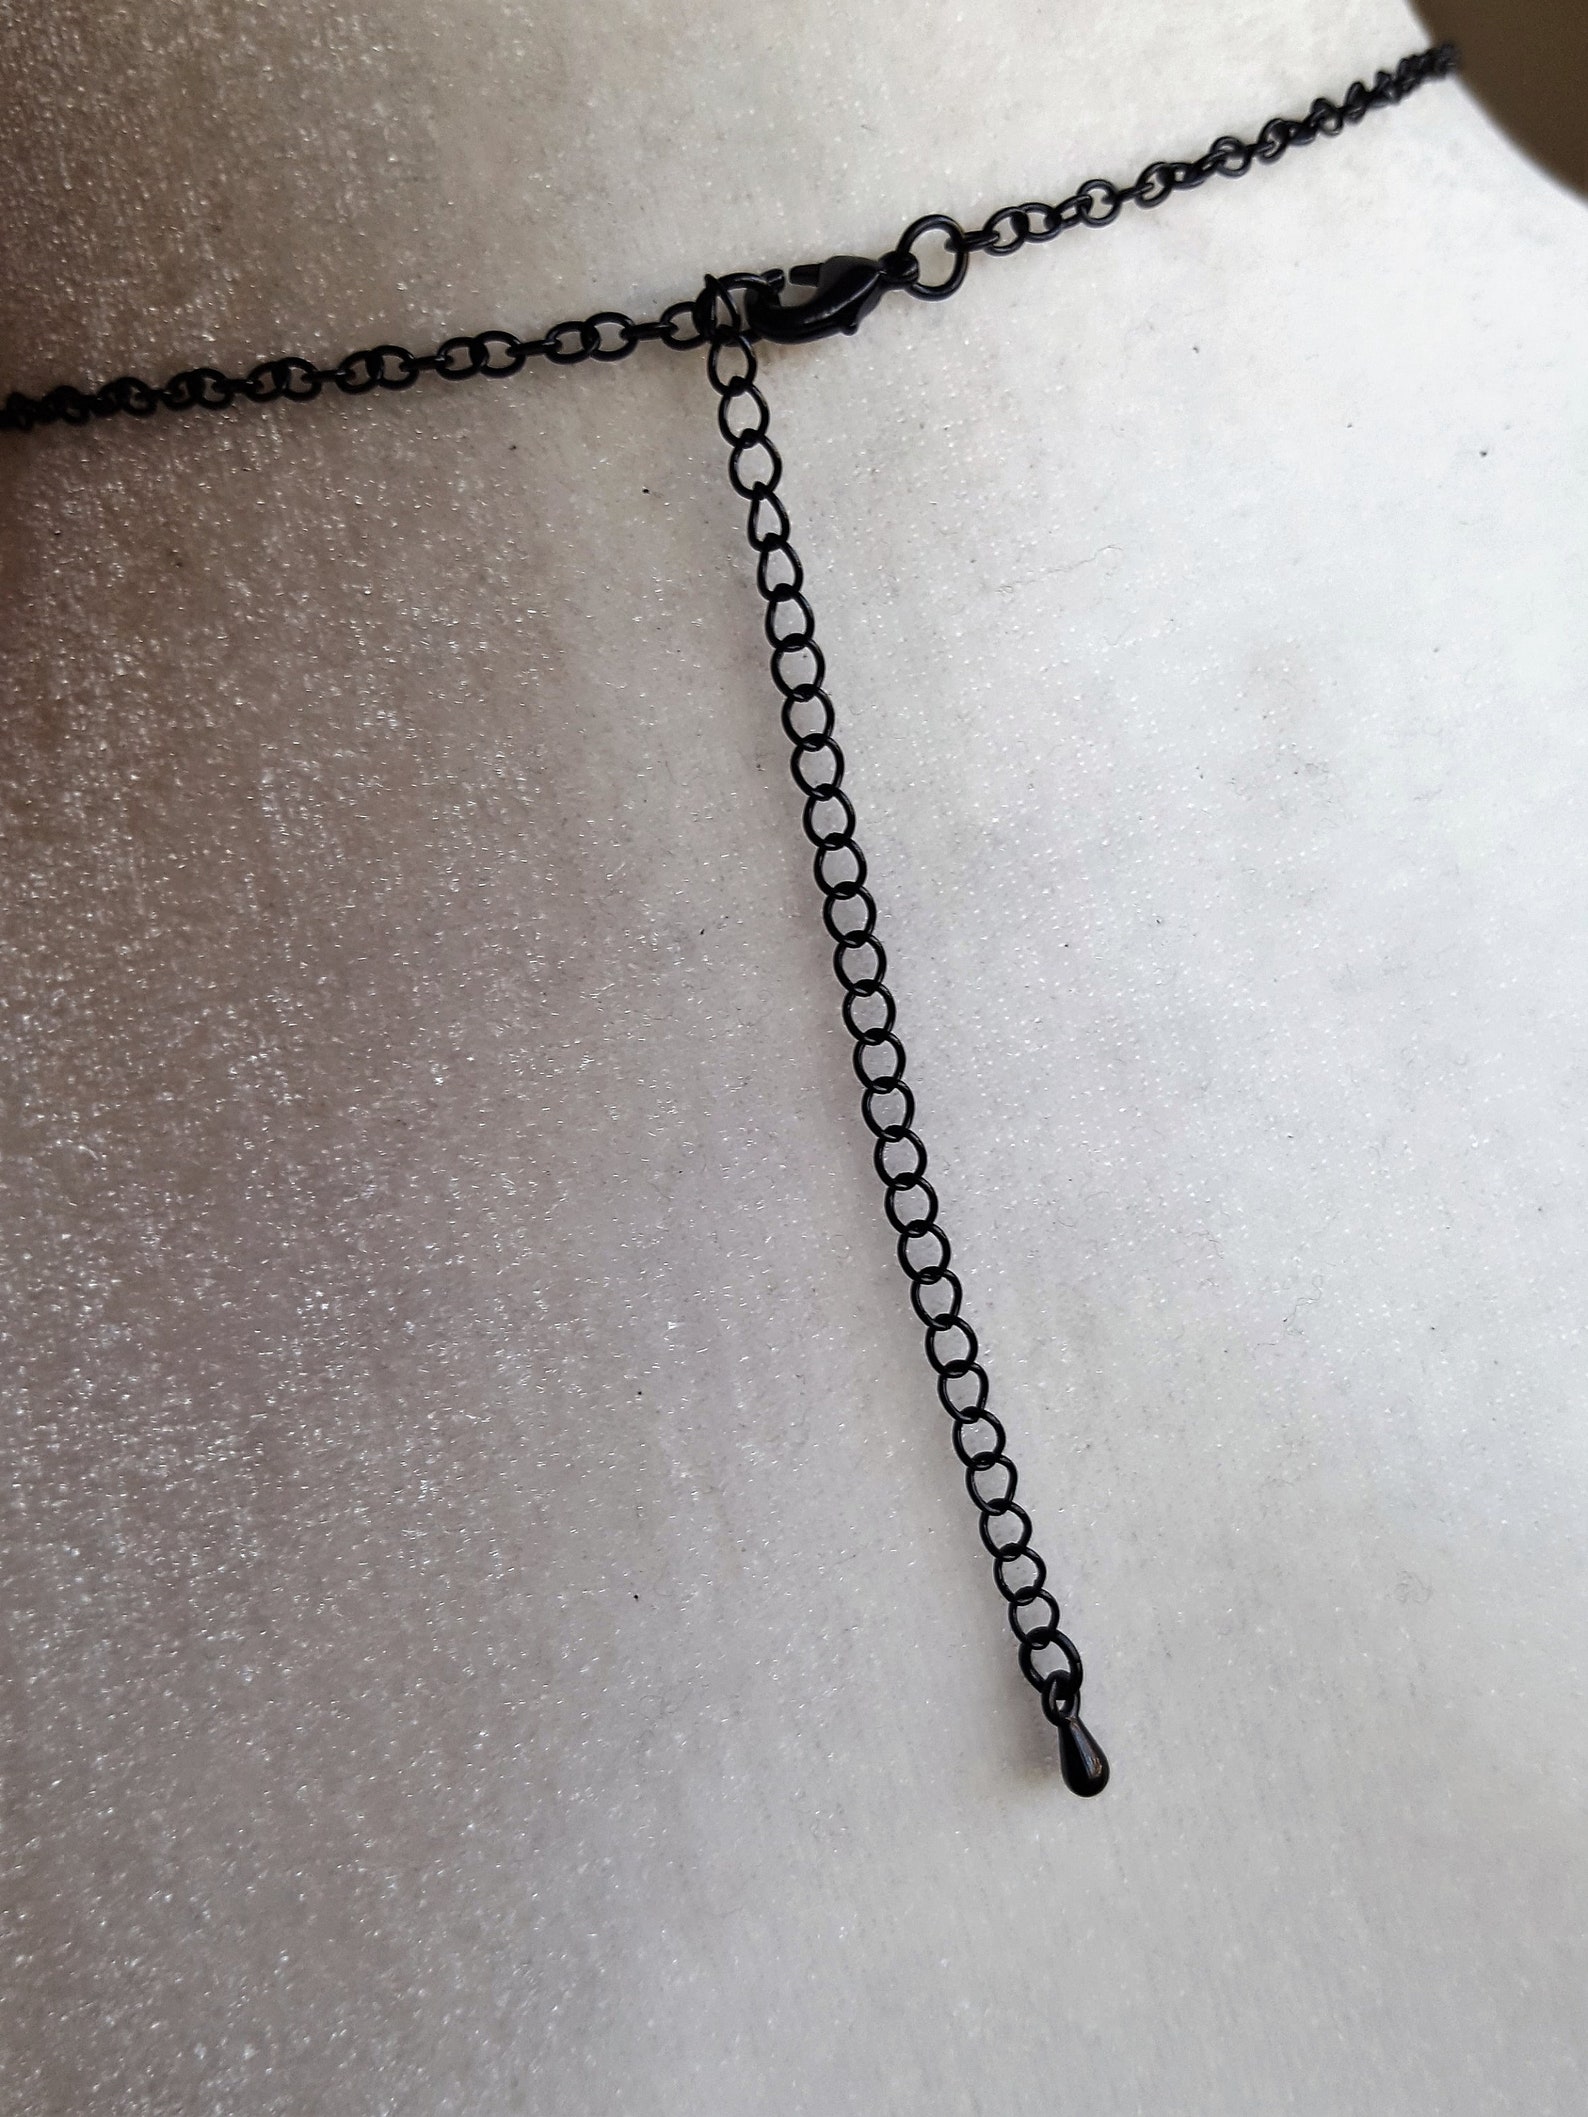 Black Cat Silhouette Black Chain Necklace Spooky Cat | Etsy